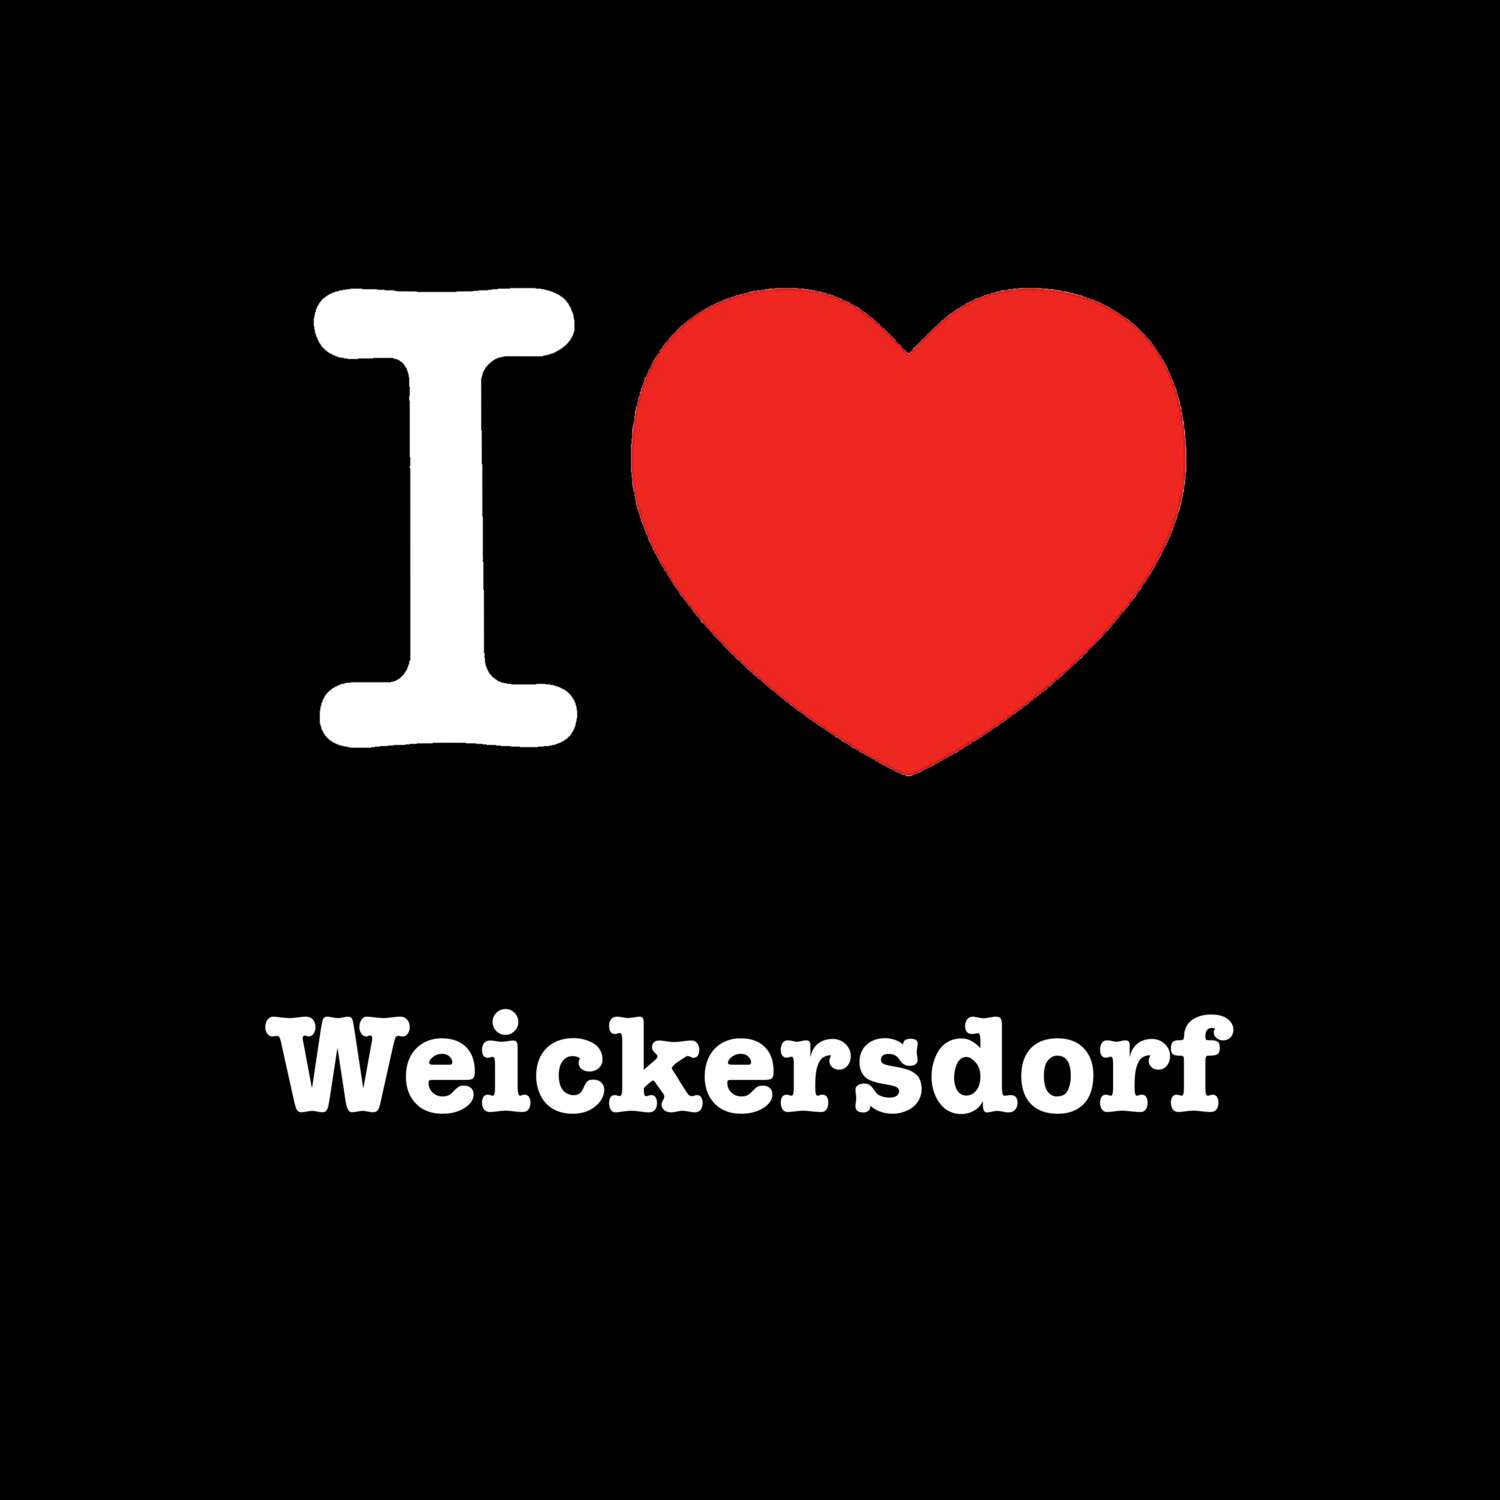 Weickersdorf T-Shirt »I love«